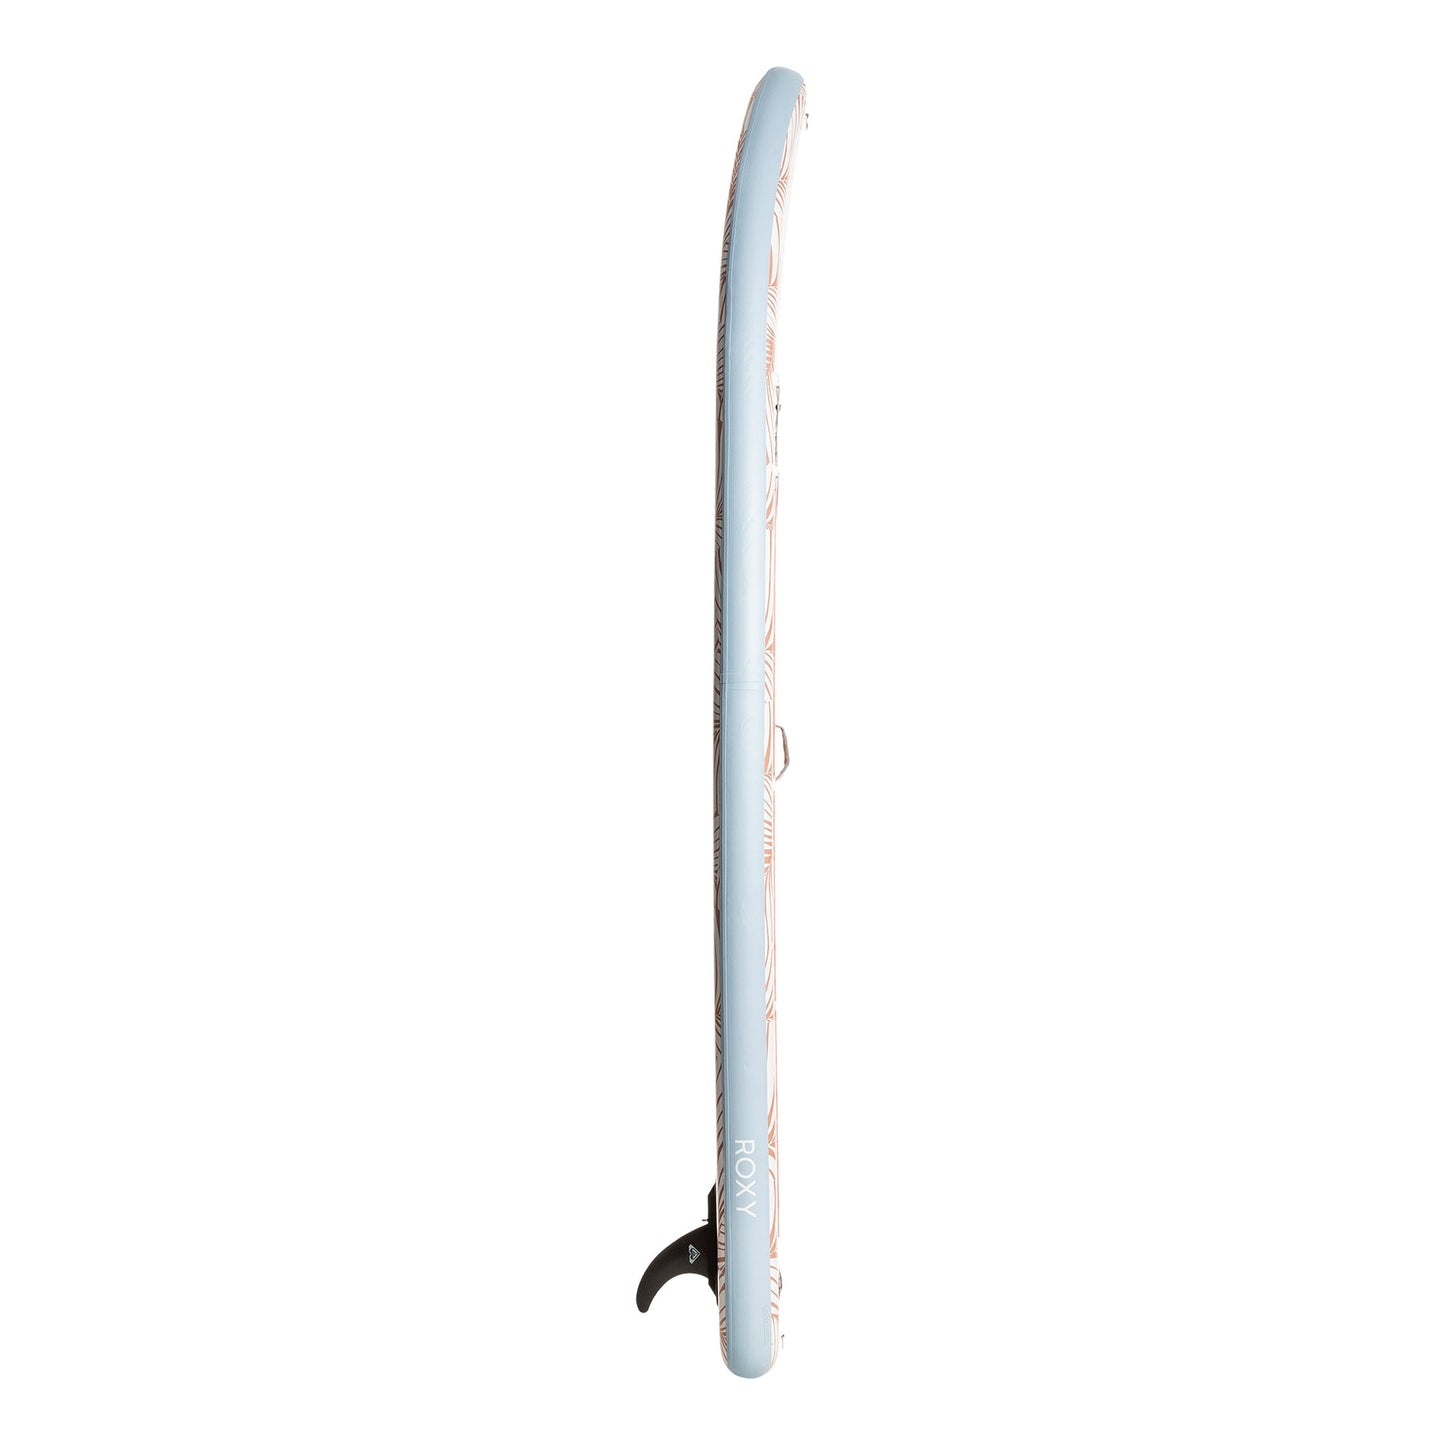 ROXY Glide iSUP 11'6"